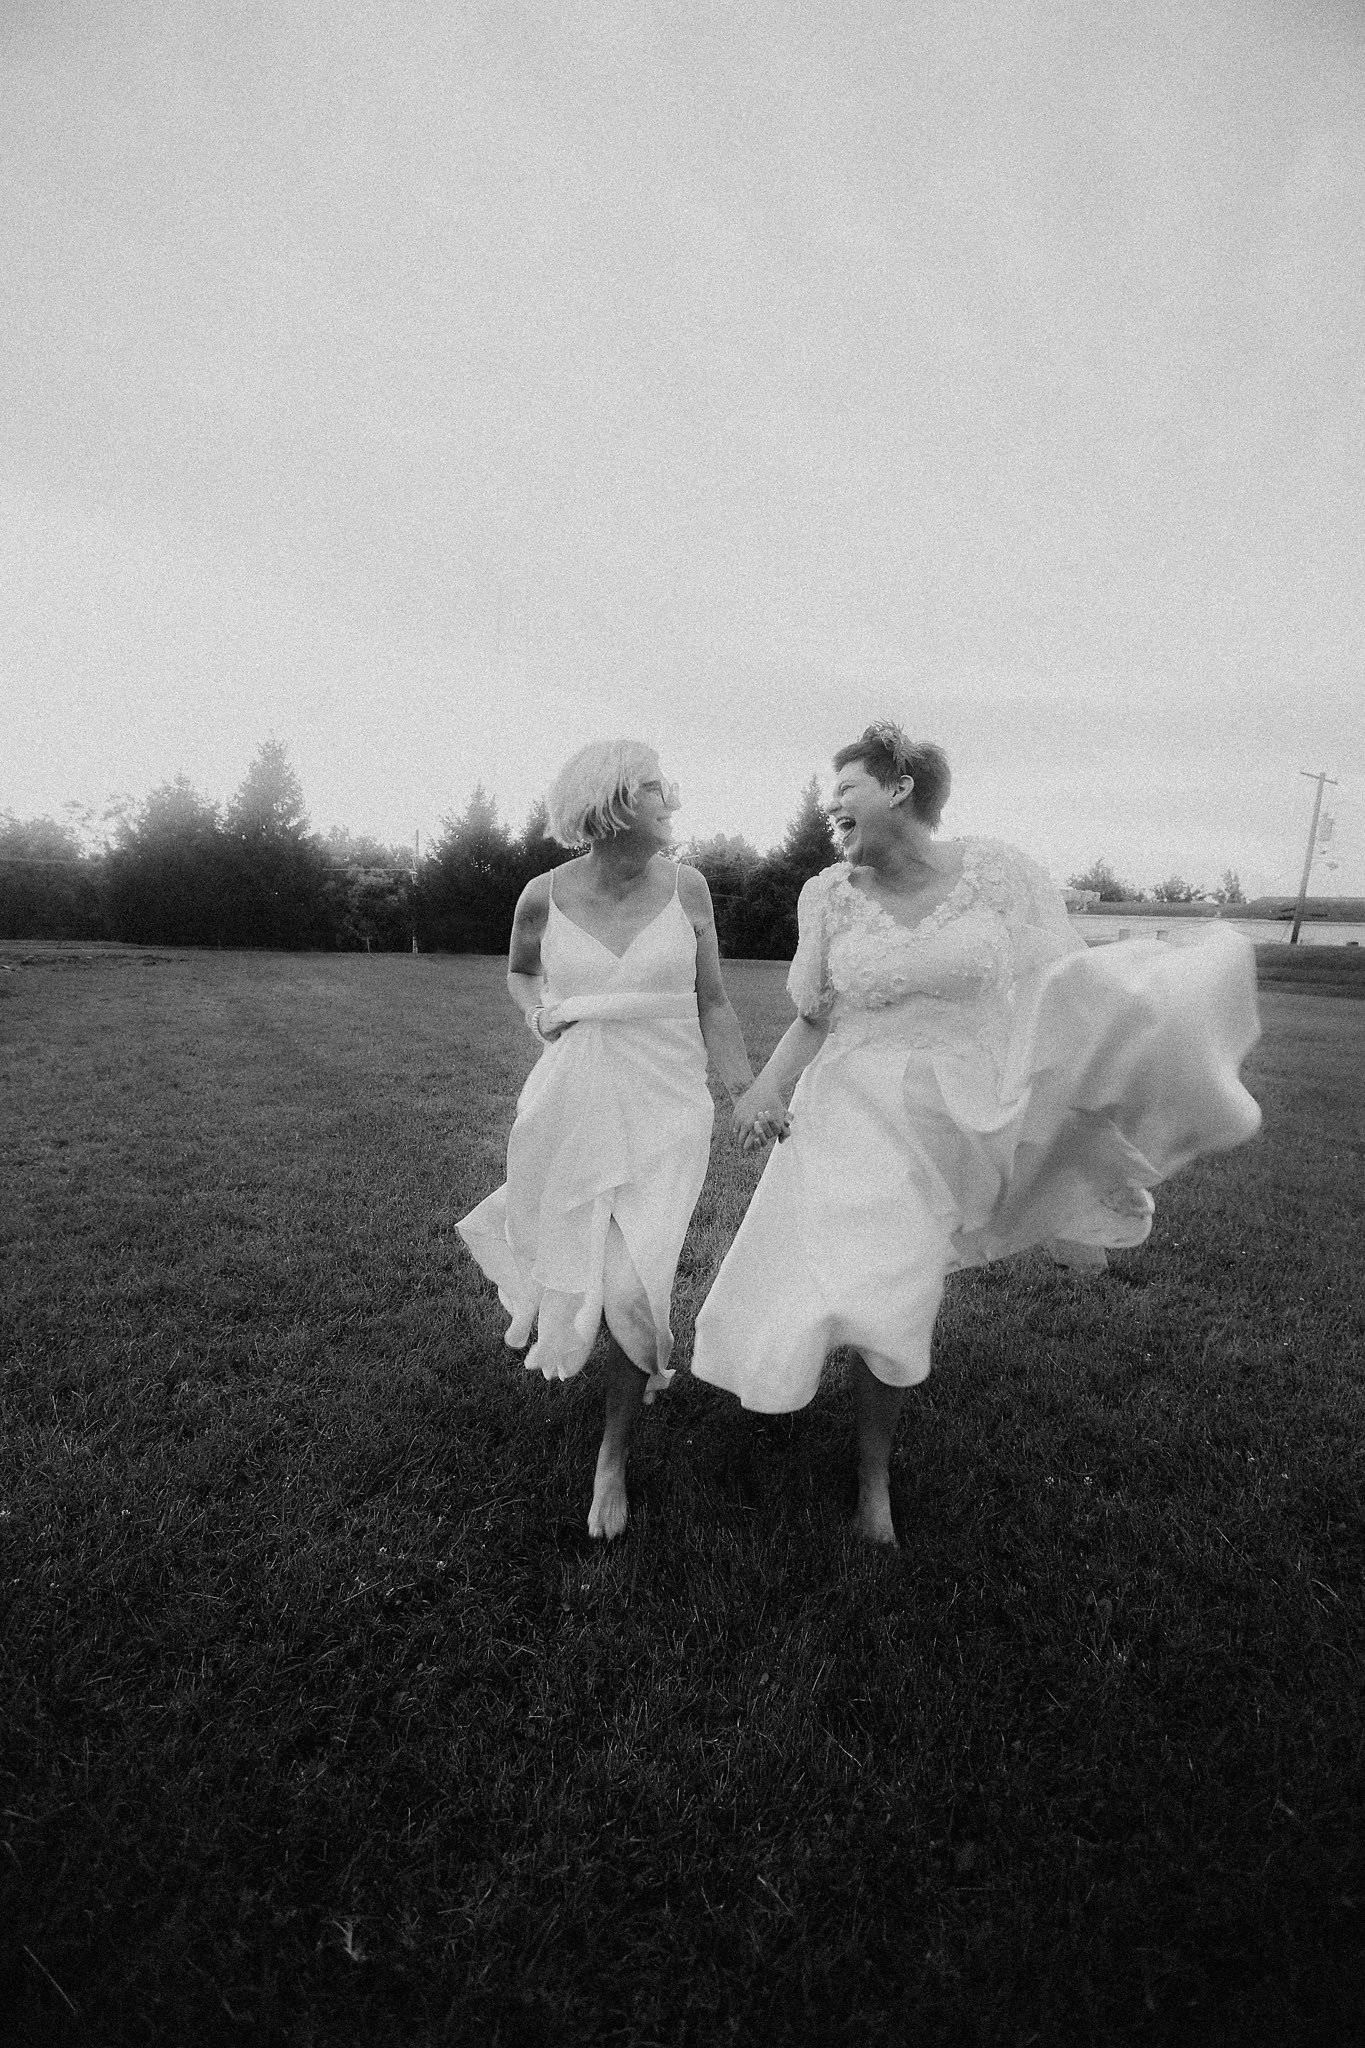 Winters-Photography-Co-Elizabeth Crum Bridal-Inclusive-Kentucky-Weddings-LGBTQ00008.JPG